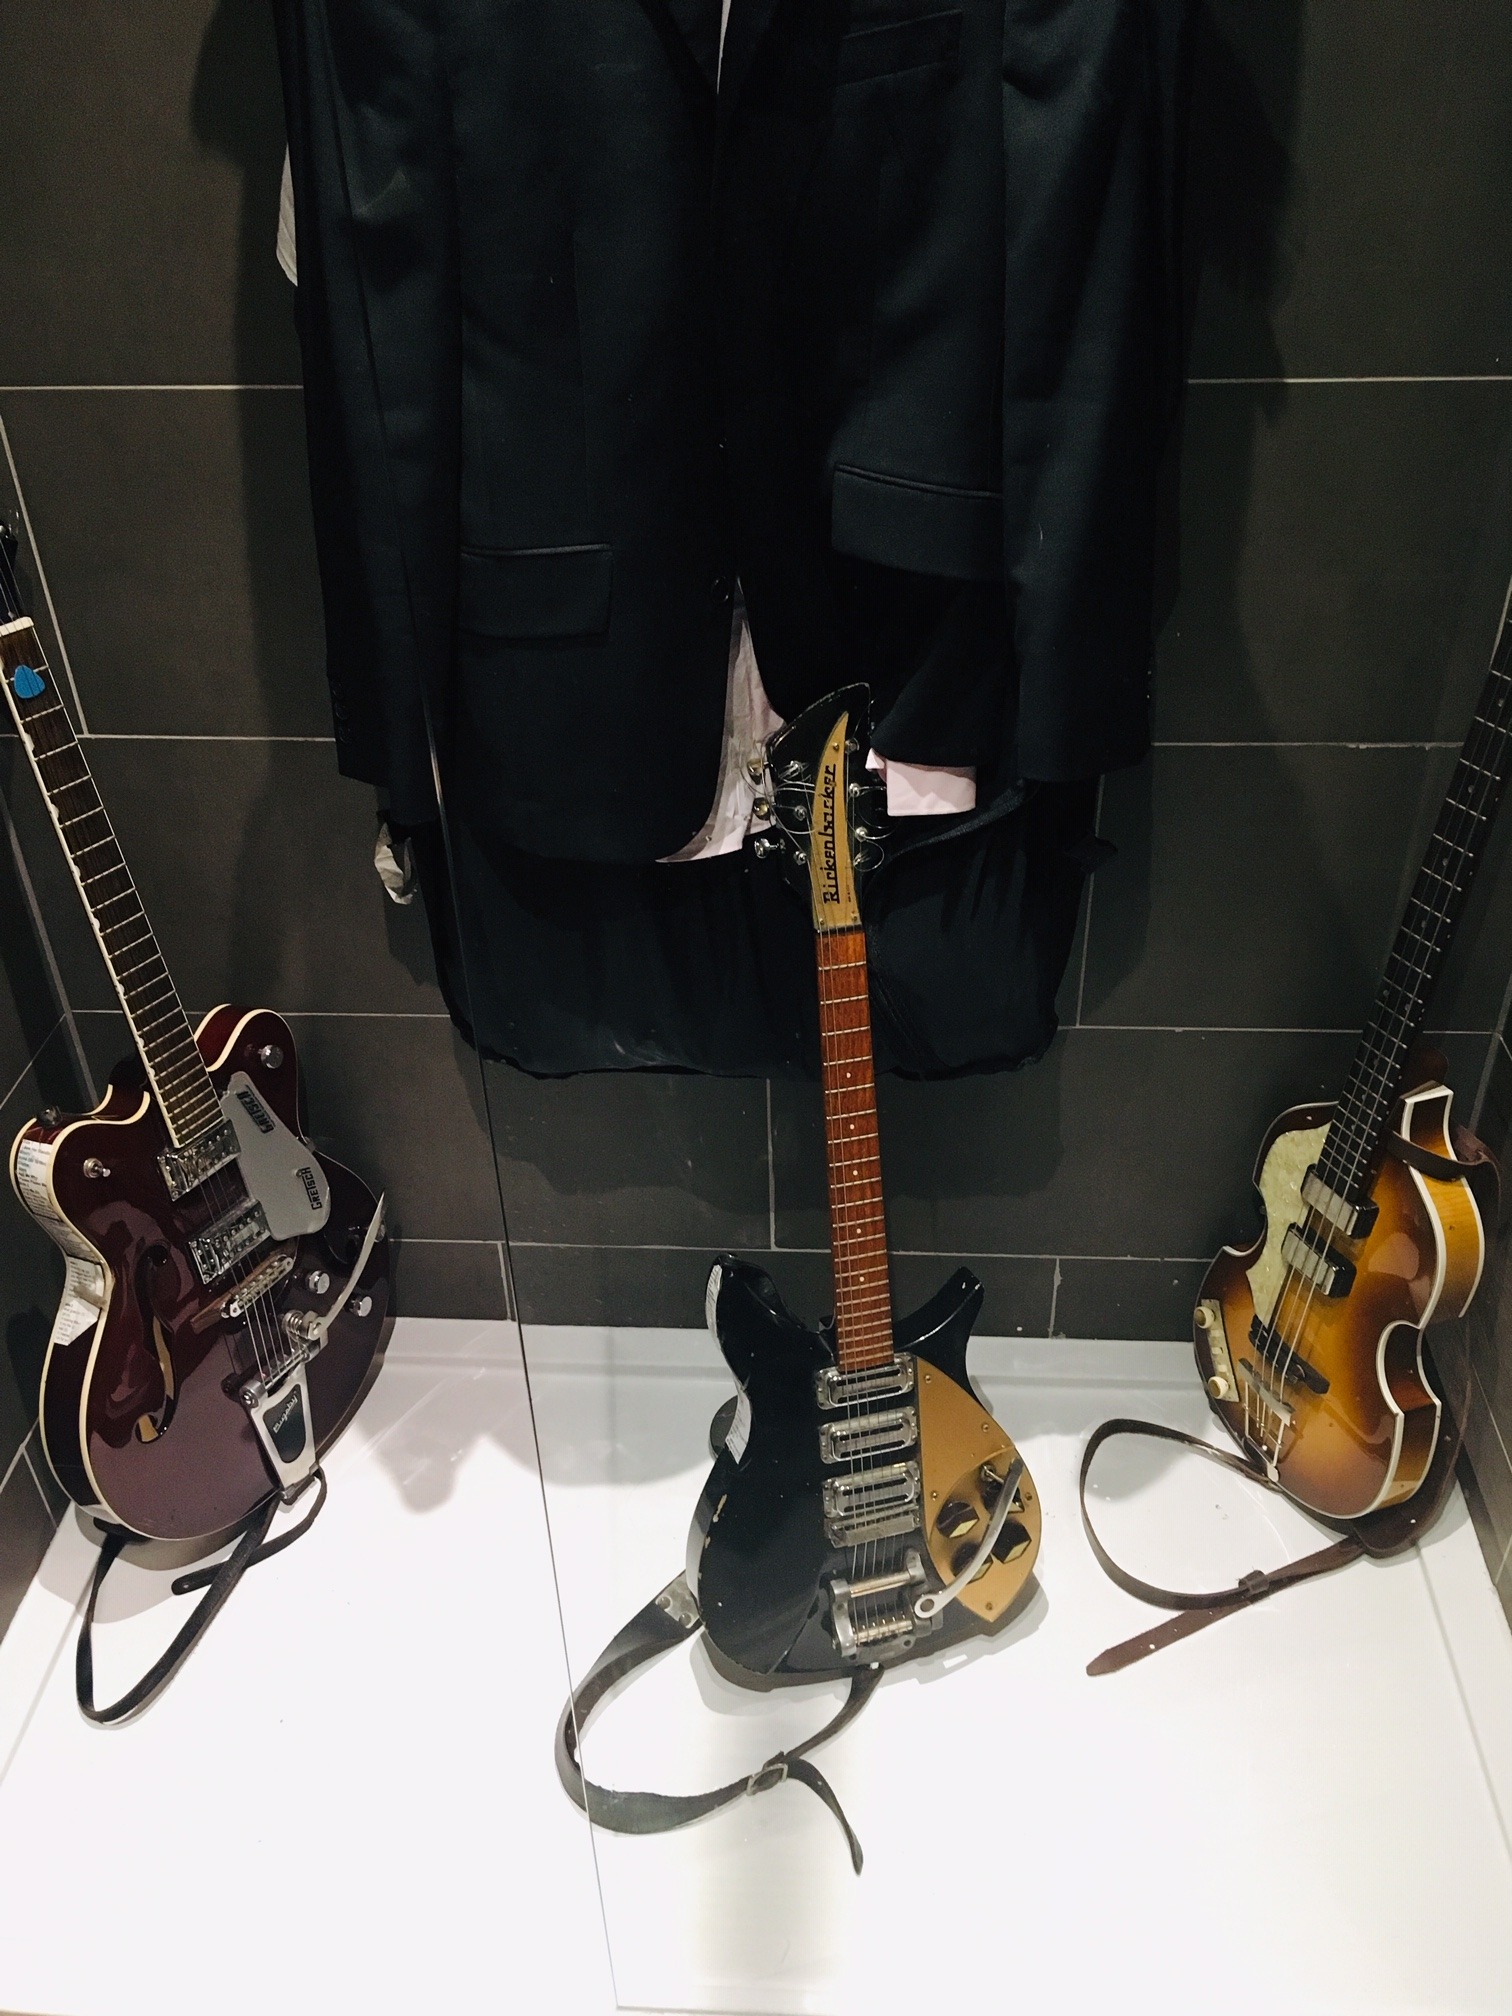 A Rickenbacker and Gretsch guitar with a Hofner Bass guitars of the Beatles Bands